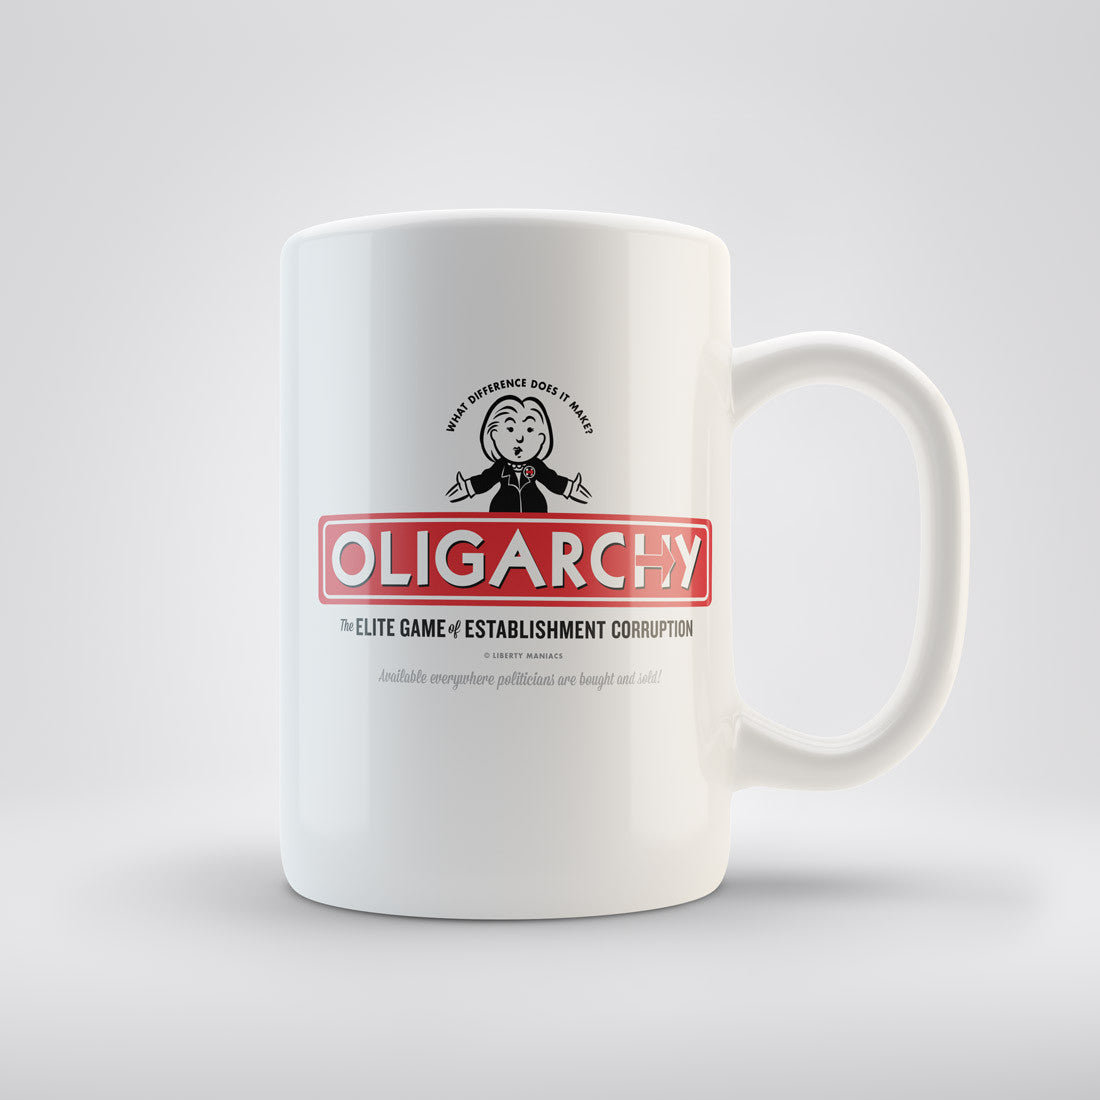 Oligarchy Game of Establishment Corruption Mugs